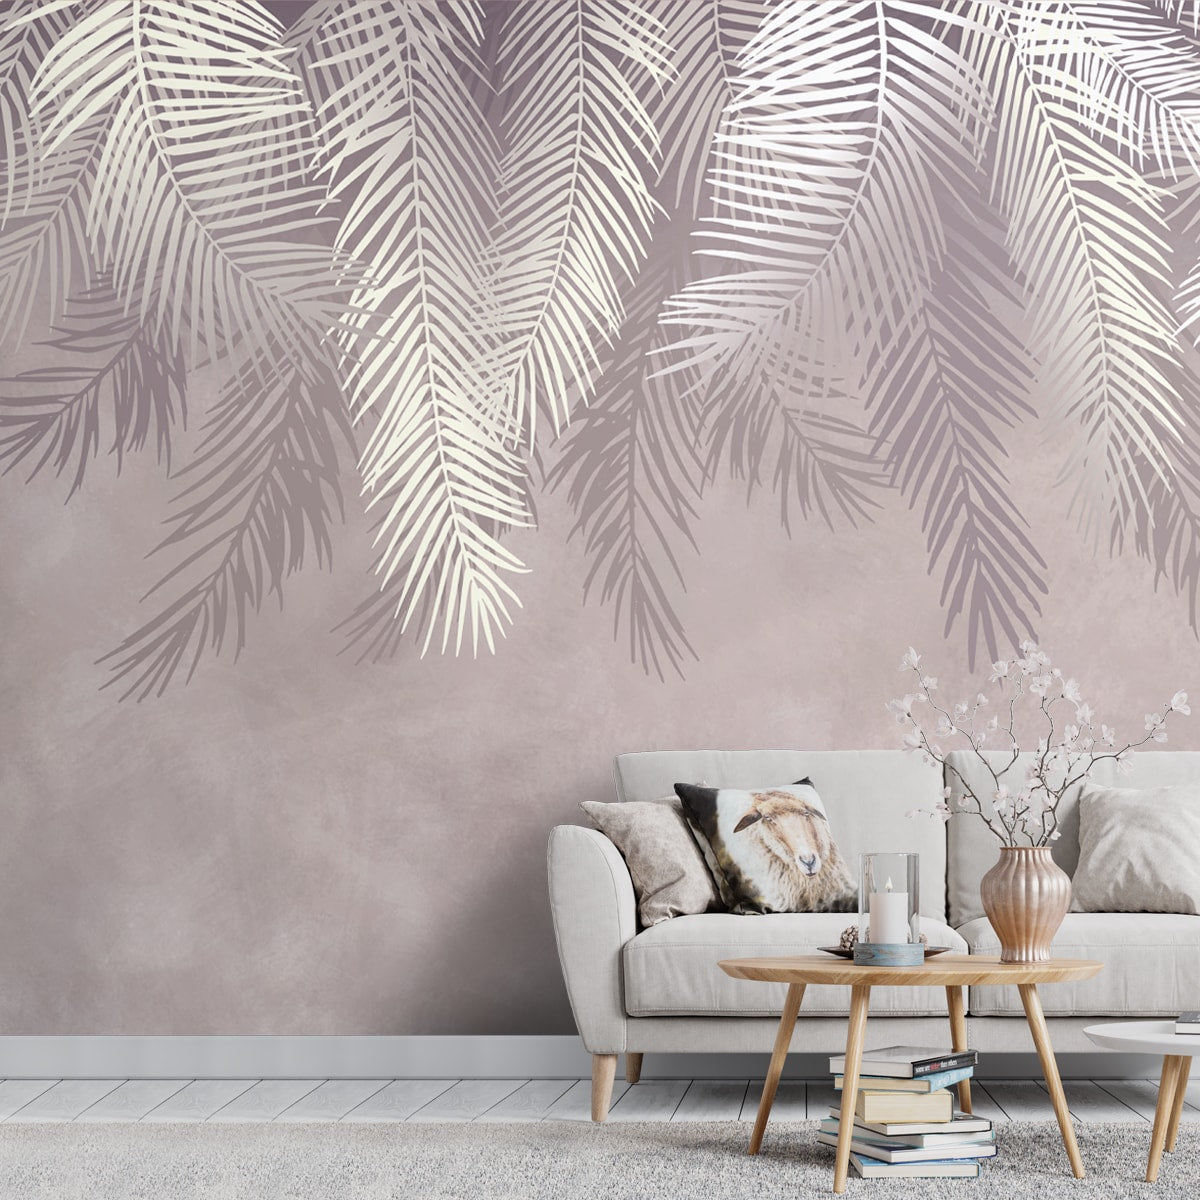 Hanging Tropical Leaves Wallpaper Design